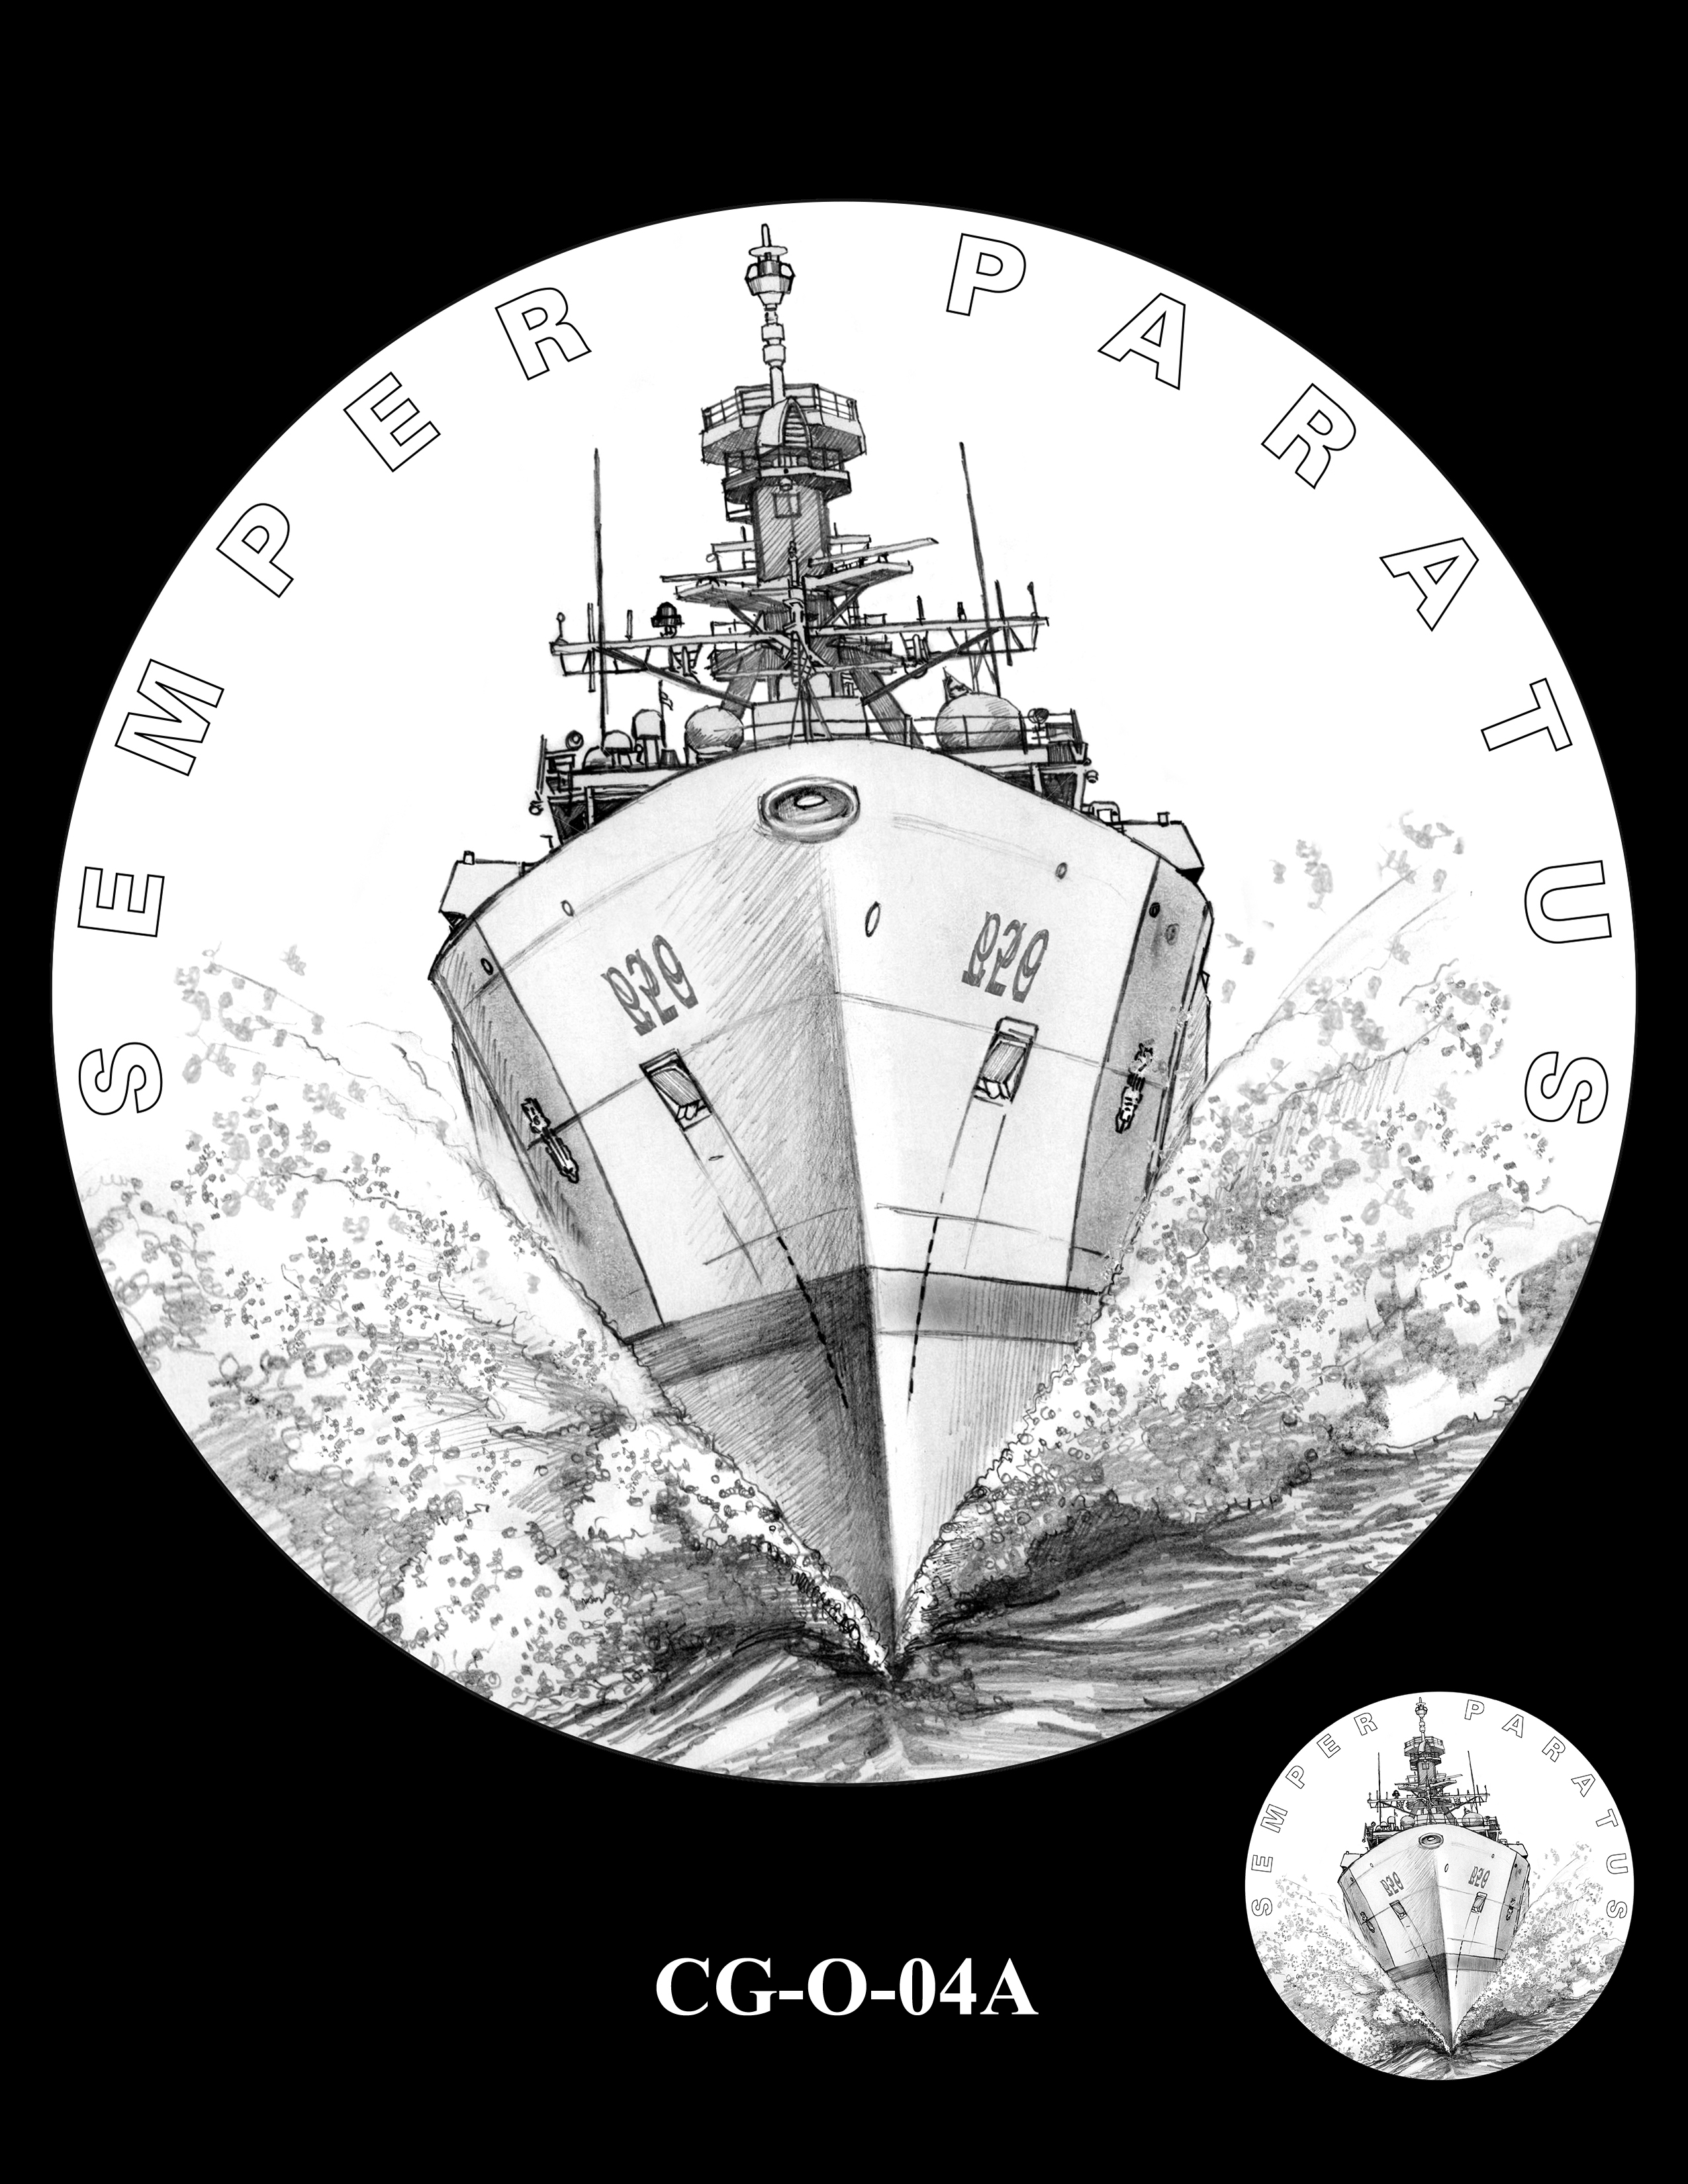 CG-O-04A -- Armed Forces Medal - Coast Guard